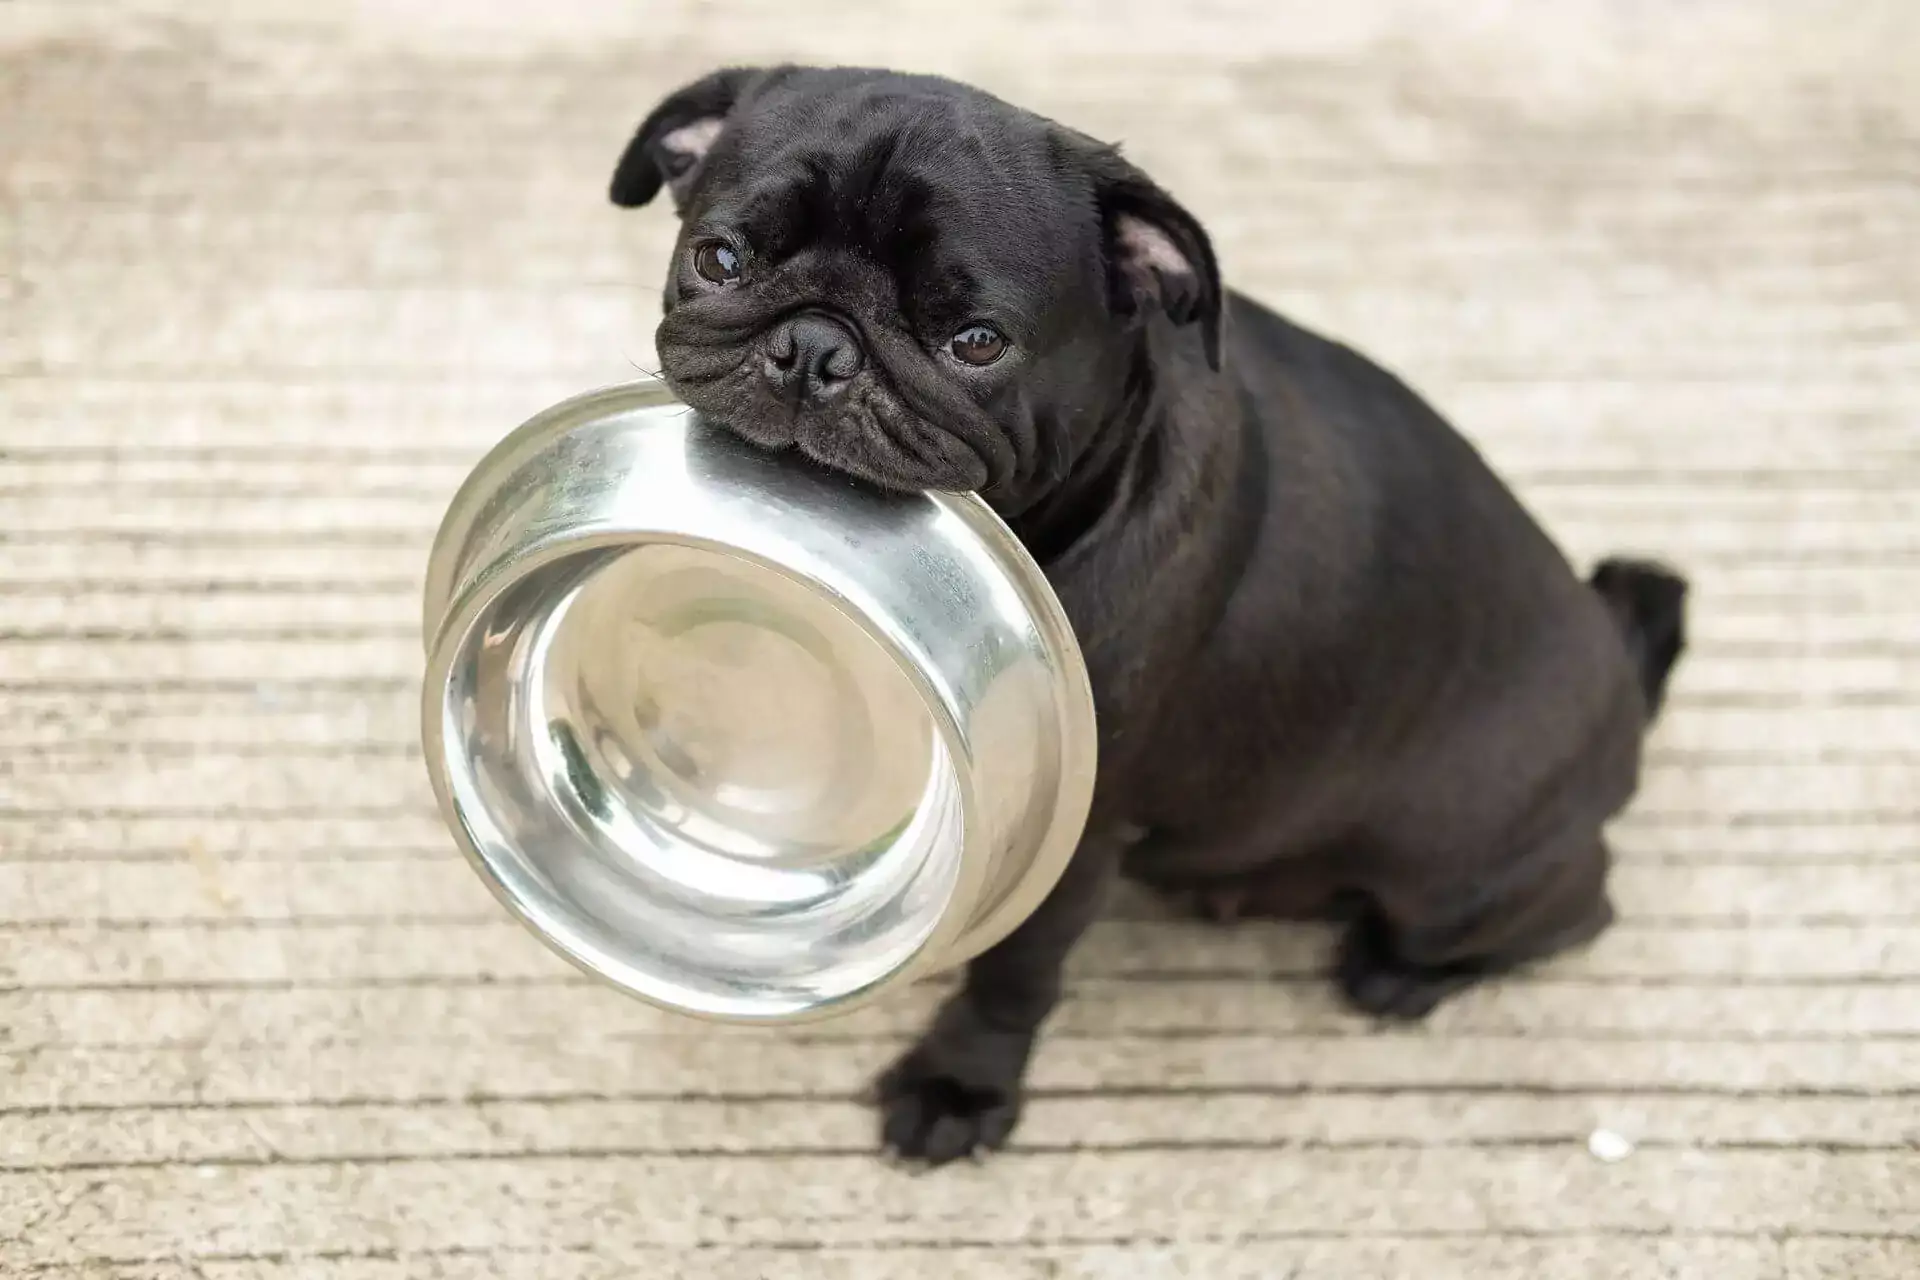 funny pug dog bite stainless bowl wait to eat dog food